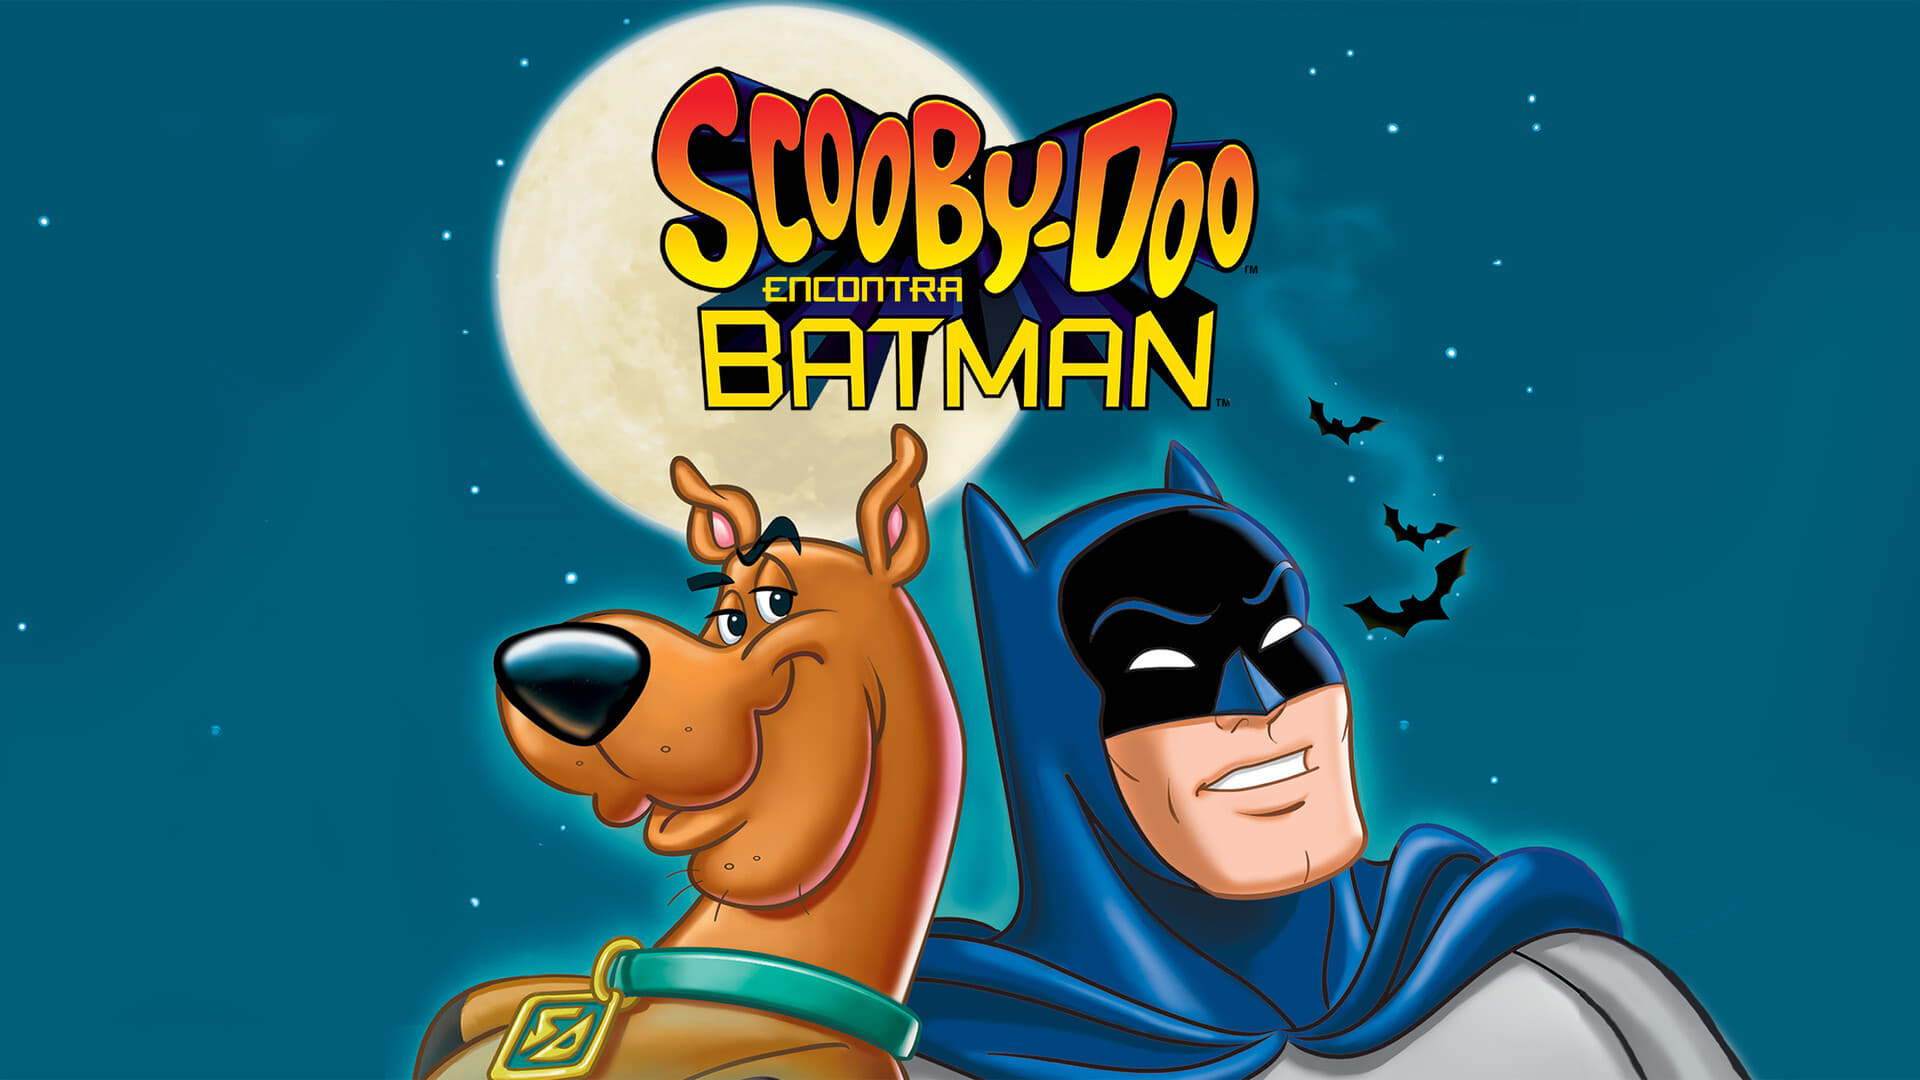 Watch Scooby-Doo Meets Batman (2002) Full Movie Online - Plex